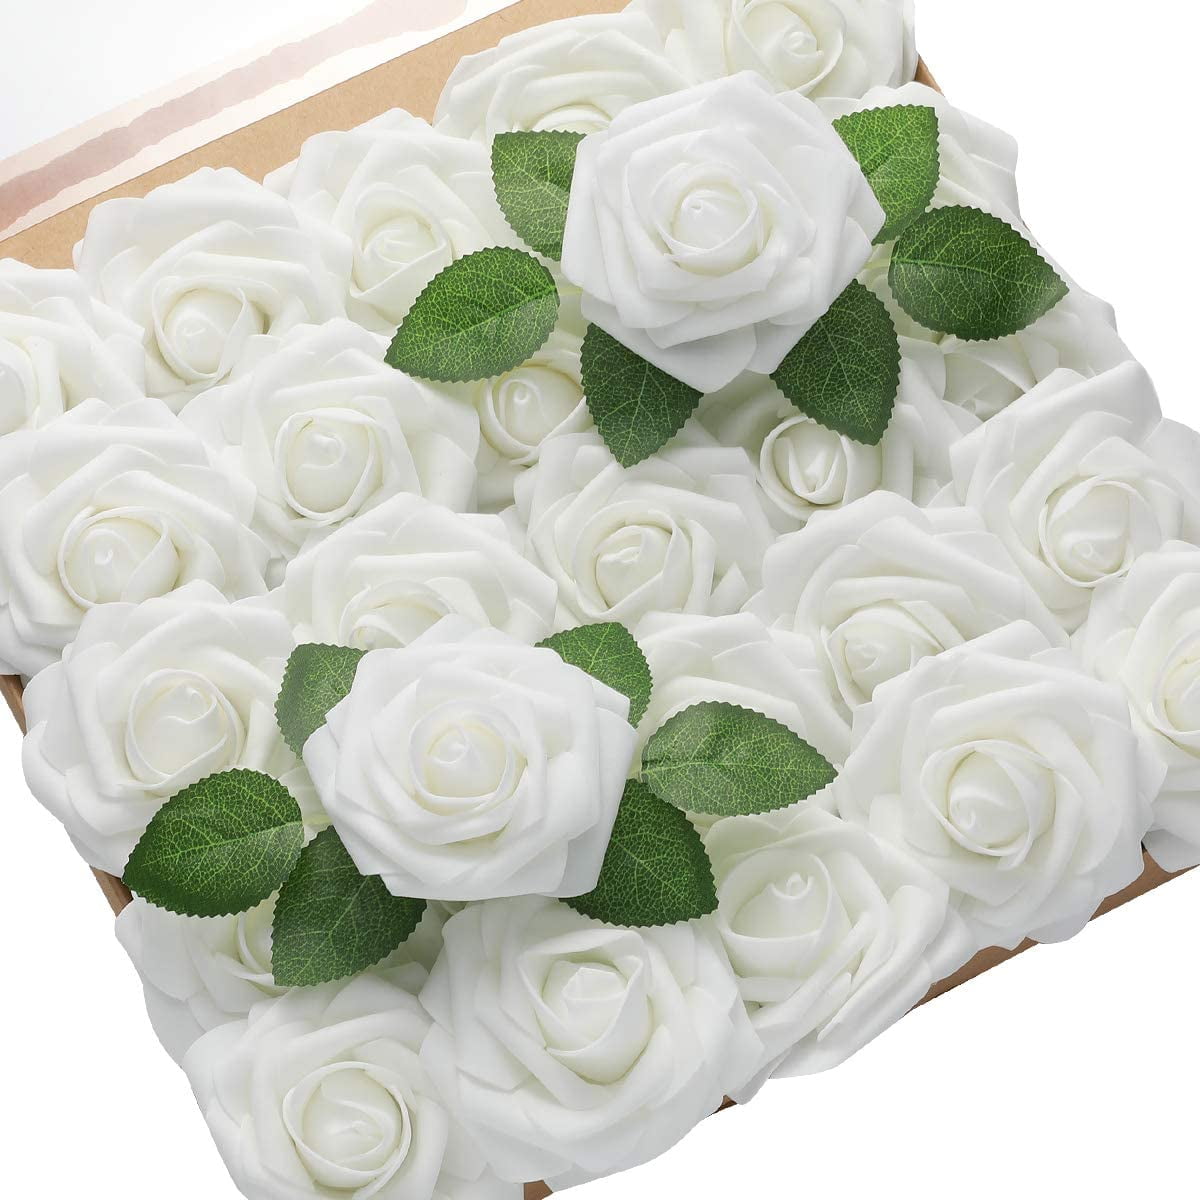 25pcs Foam Roses Artificial Fake Flowers Party Wedding Bridal Bouquet Home Decor 